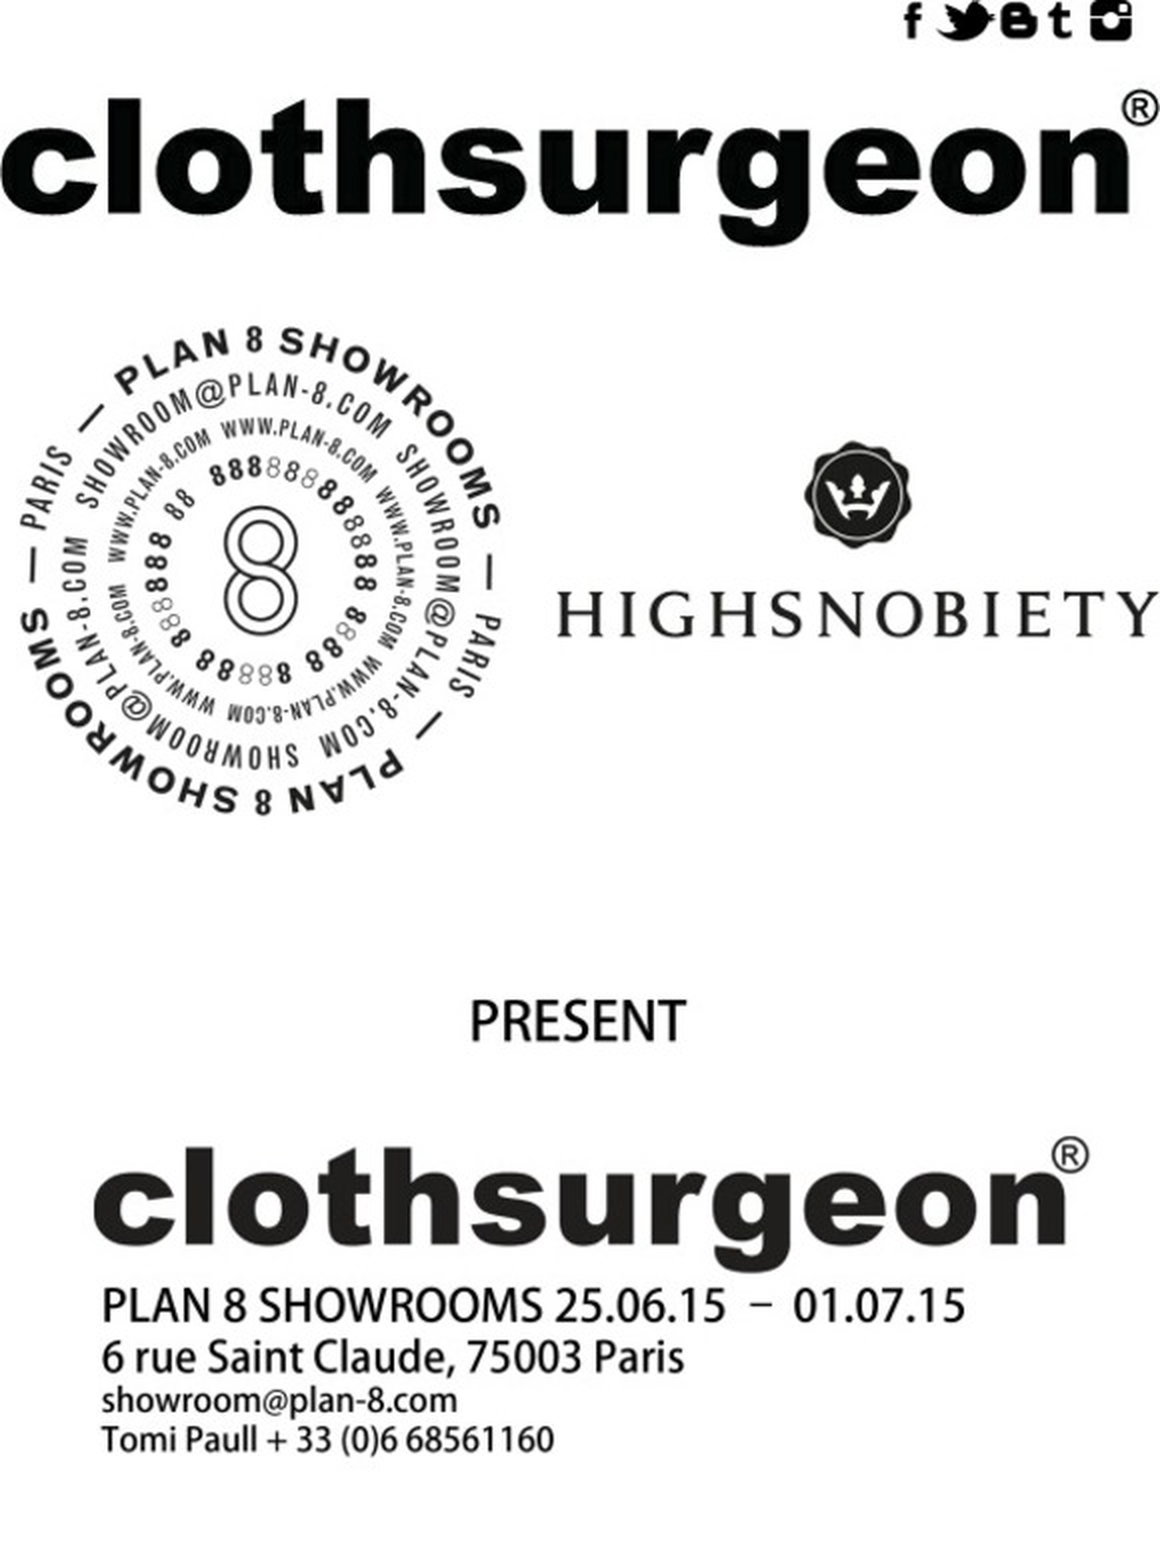 Clothsurgeon Louis Vuitton Bomber RECONSTRUCT info